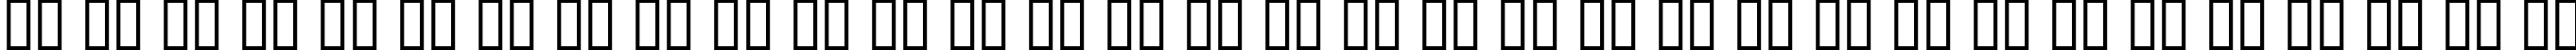 Пример написания русского алфавита шрифтом DomoAregato Italic